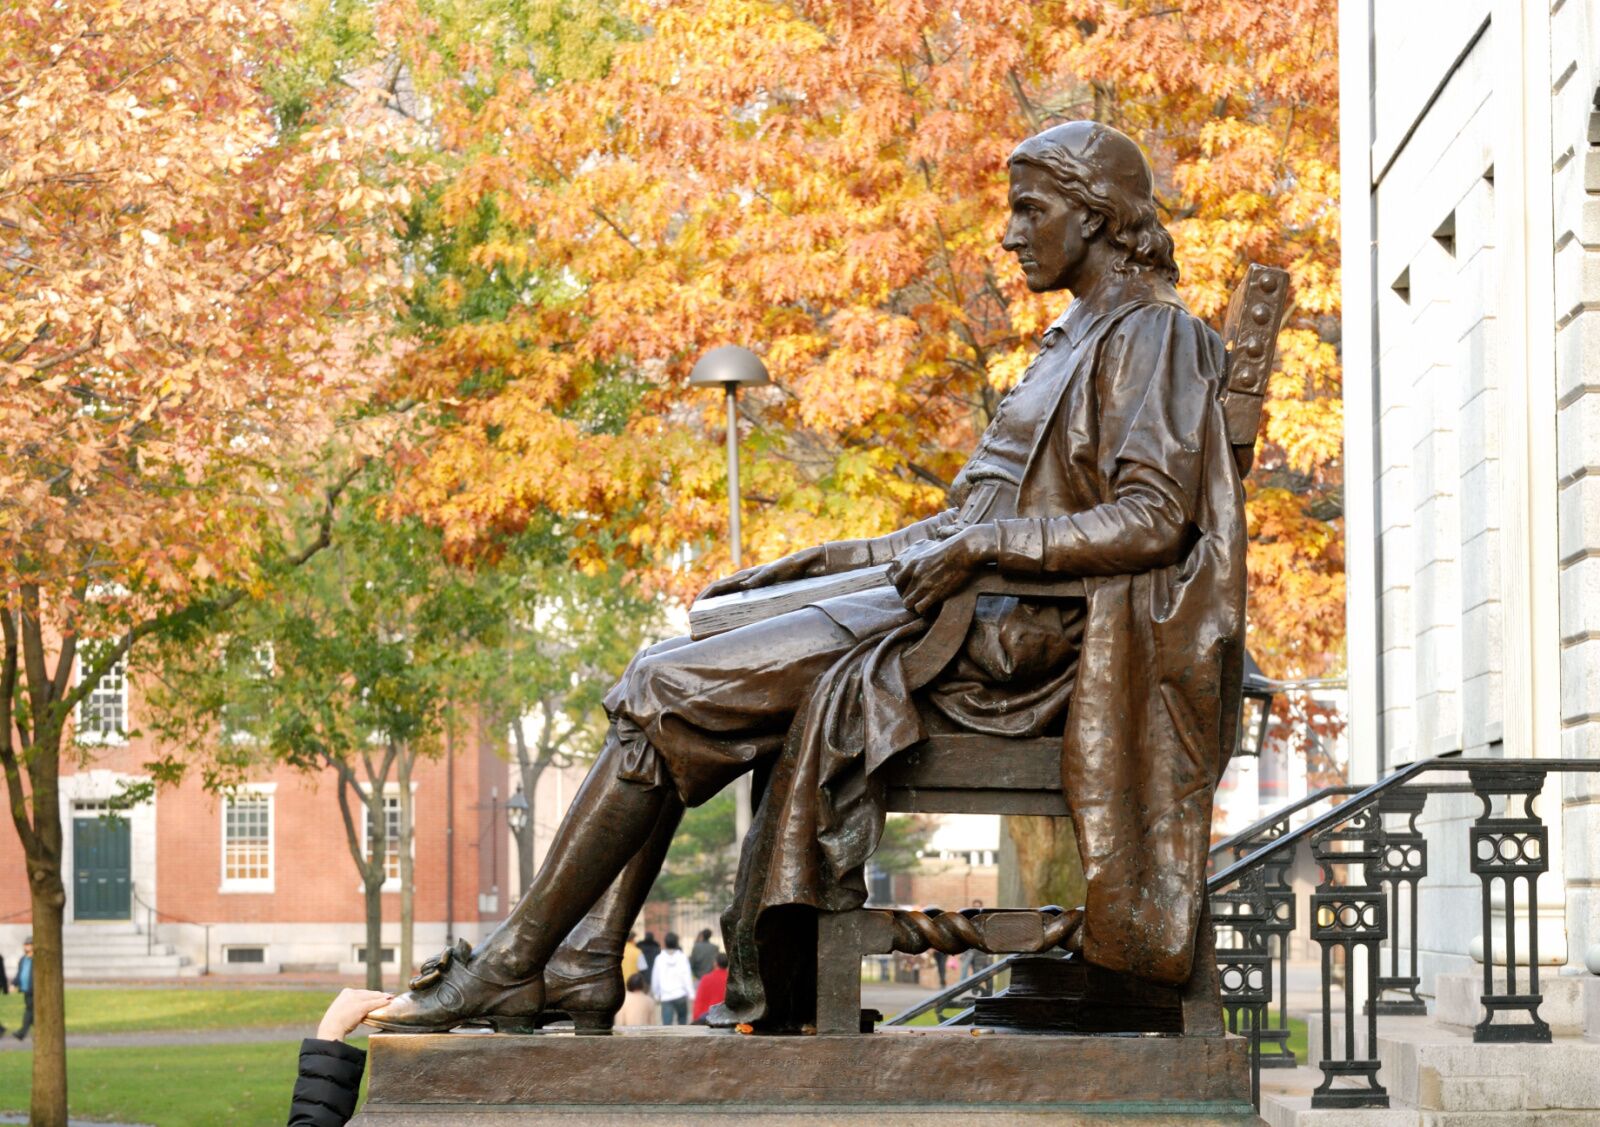 parks in boston, MA - harvard statue at harvard yard